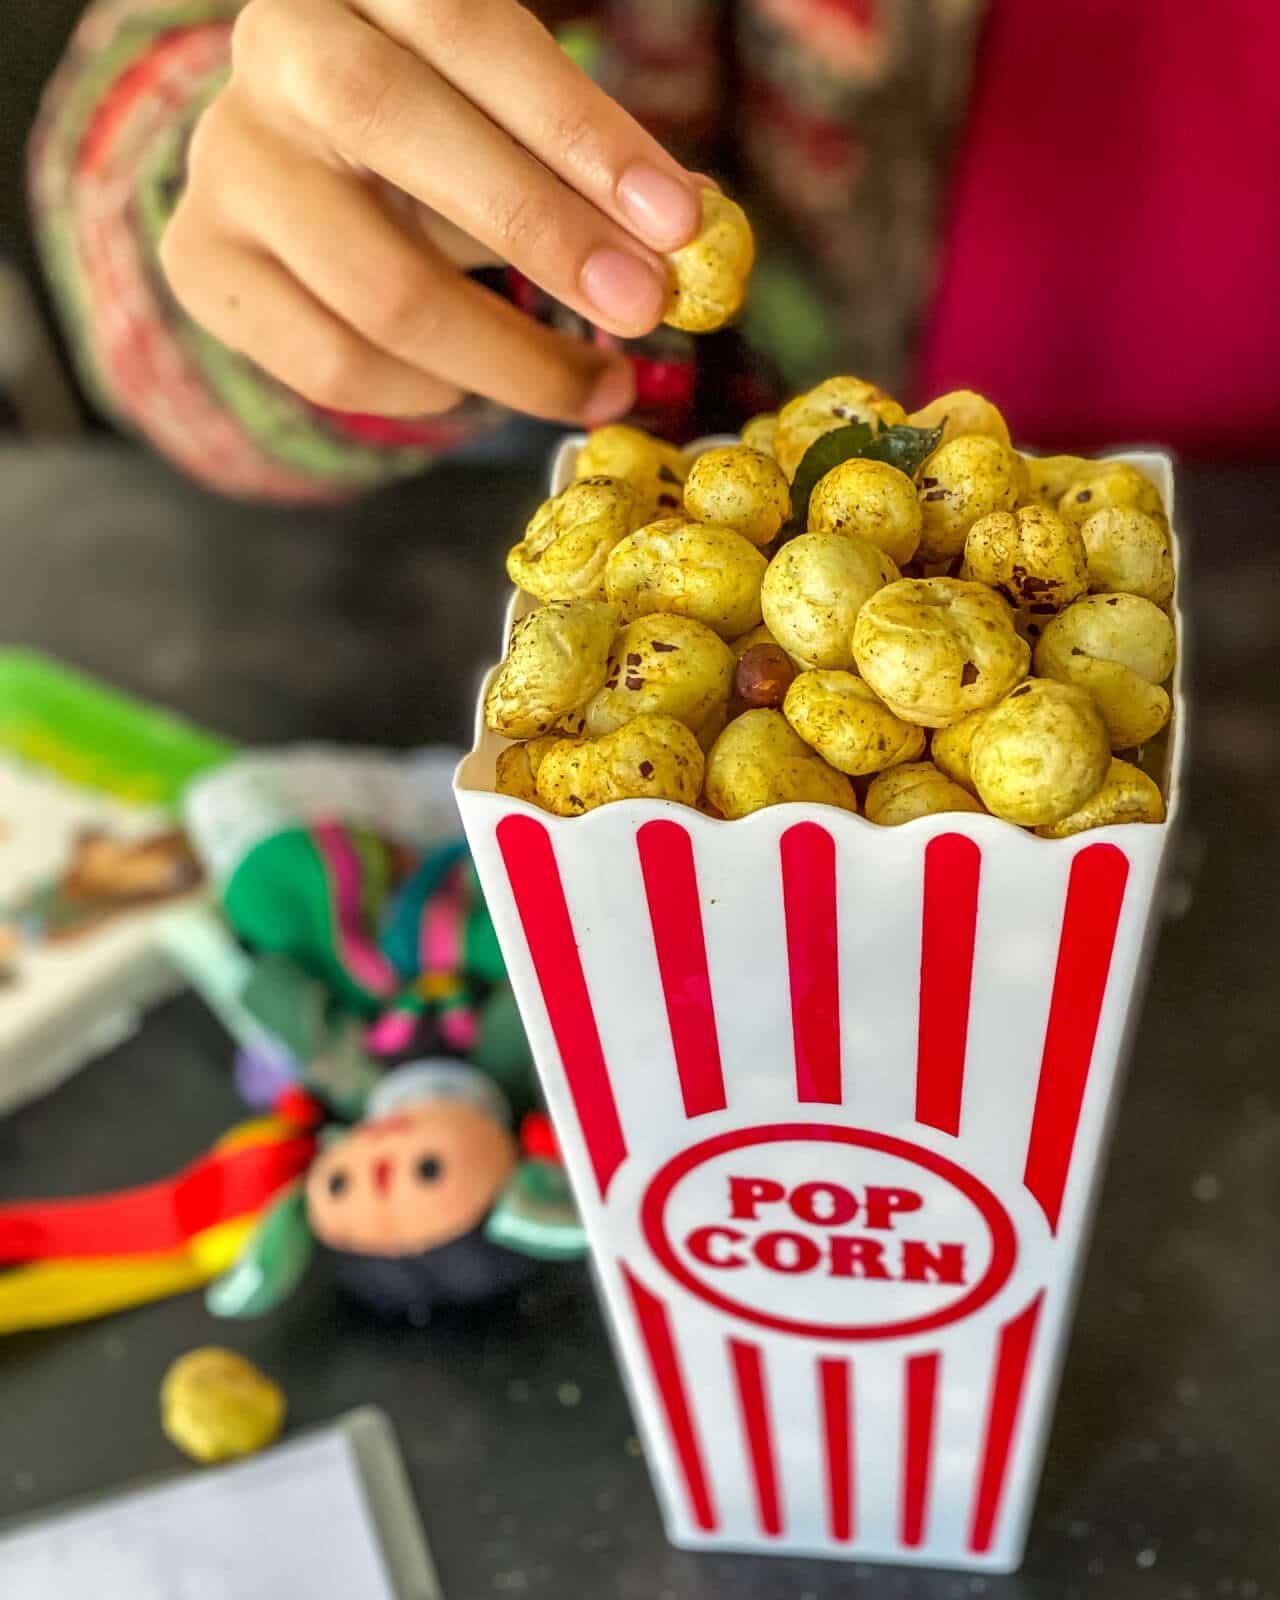 A hand picking a makhana kept in a popcorn box